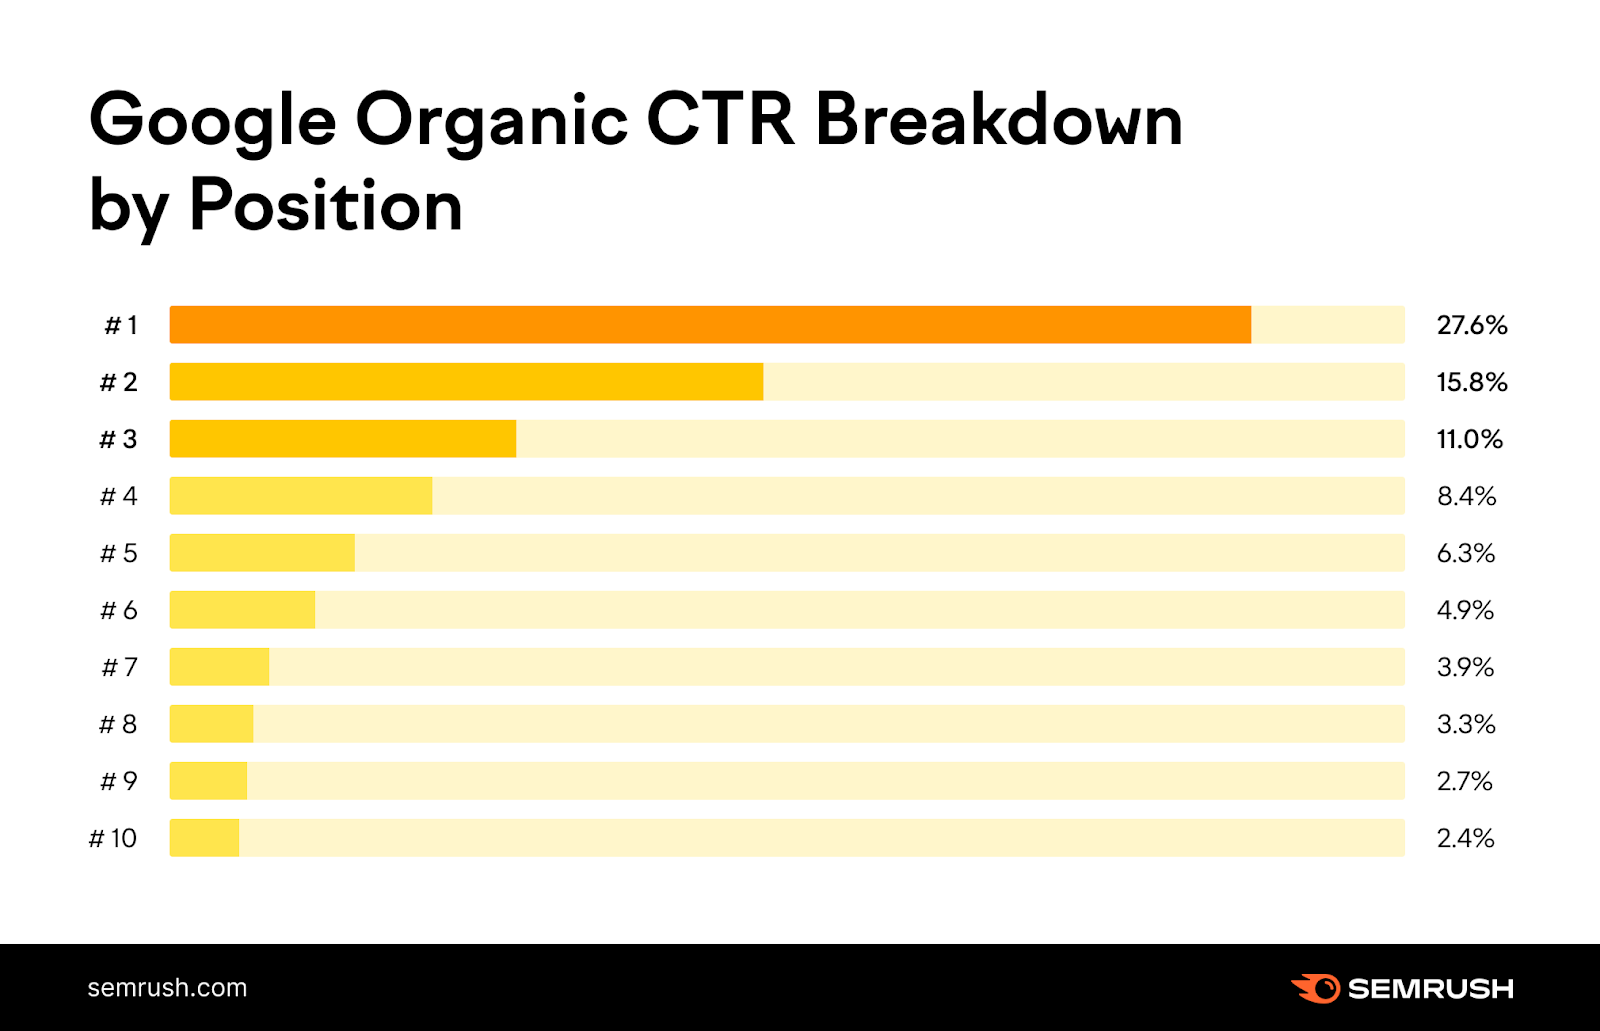 Google organic CTR breakdown by position